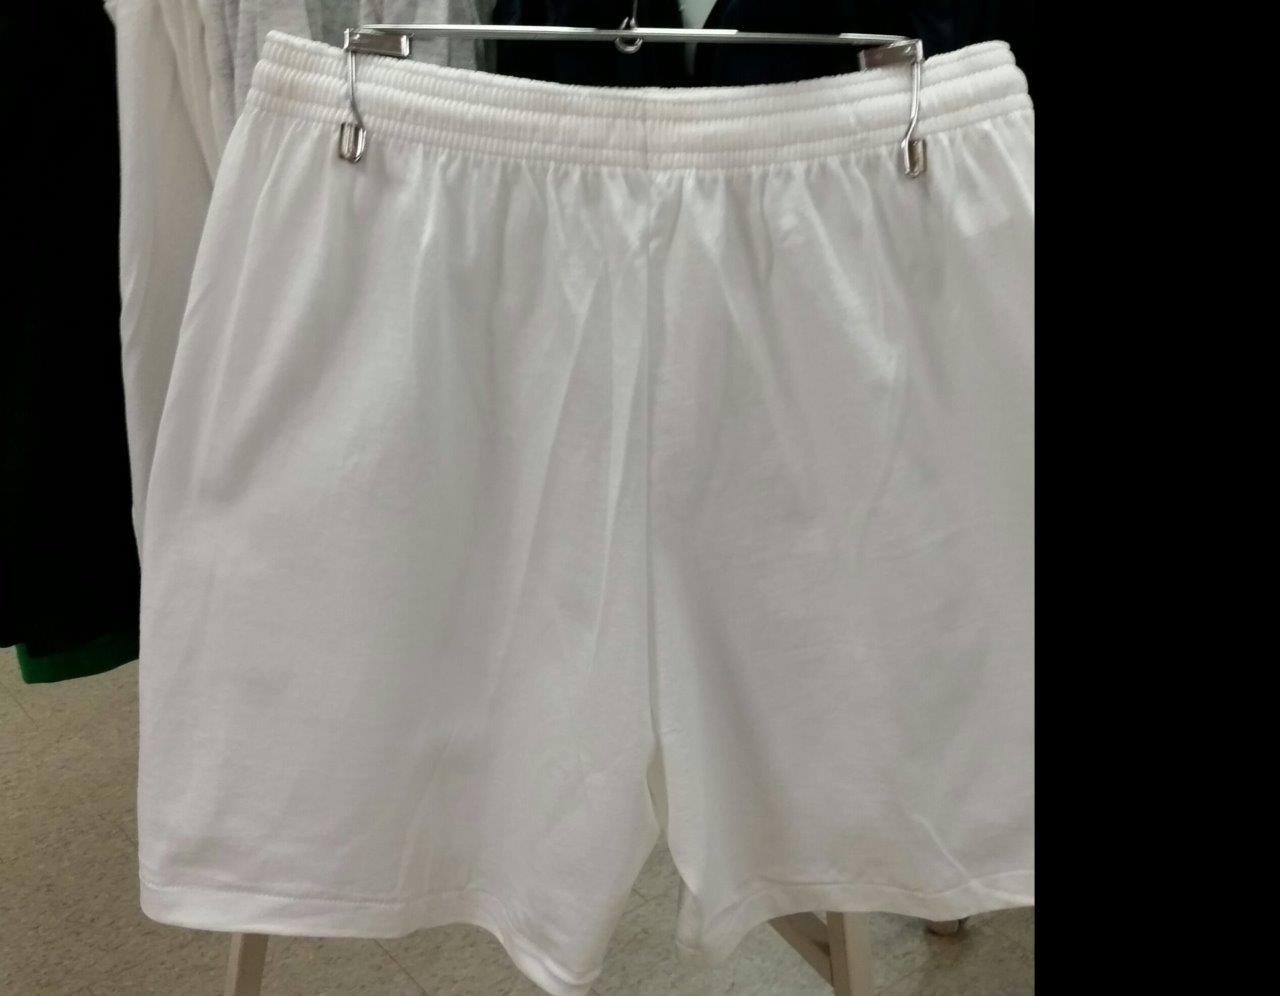 100% Cotton Shorts No Pockets w/ Drawstring. Adult sizes to 4x | eBay